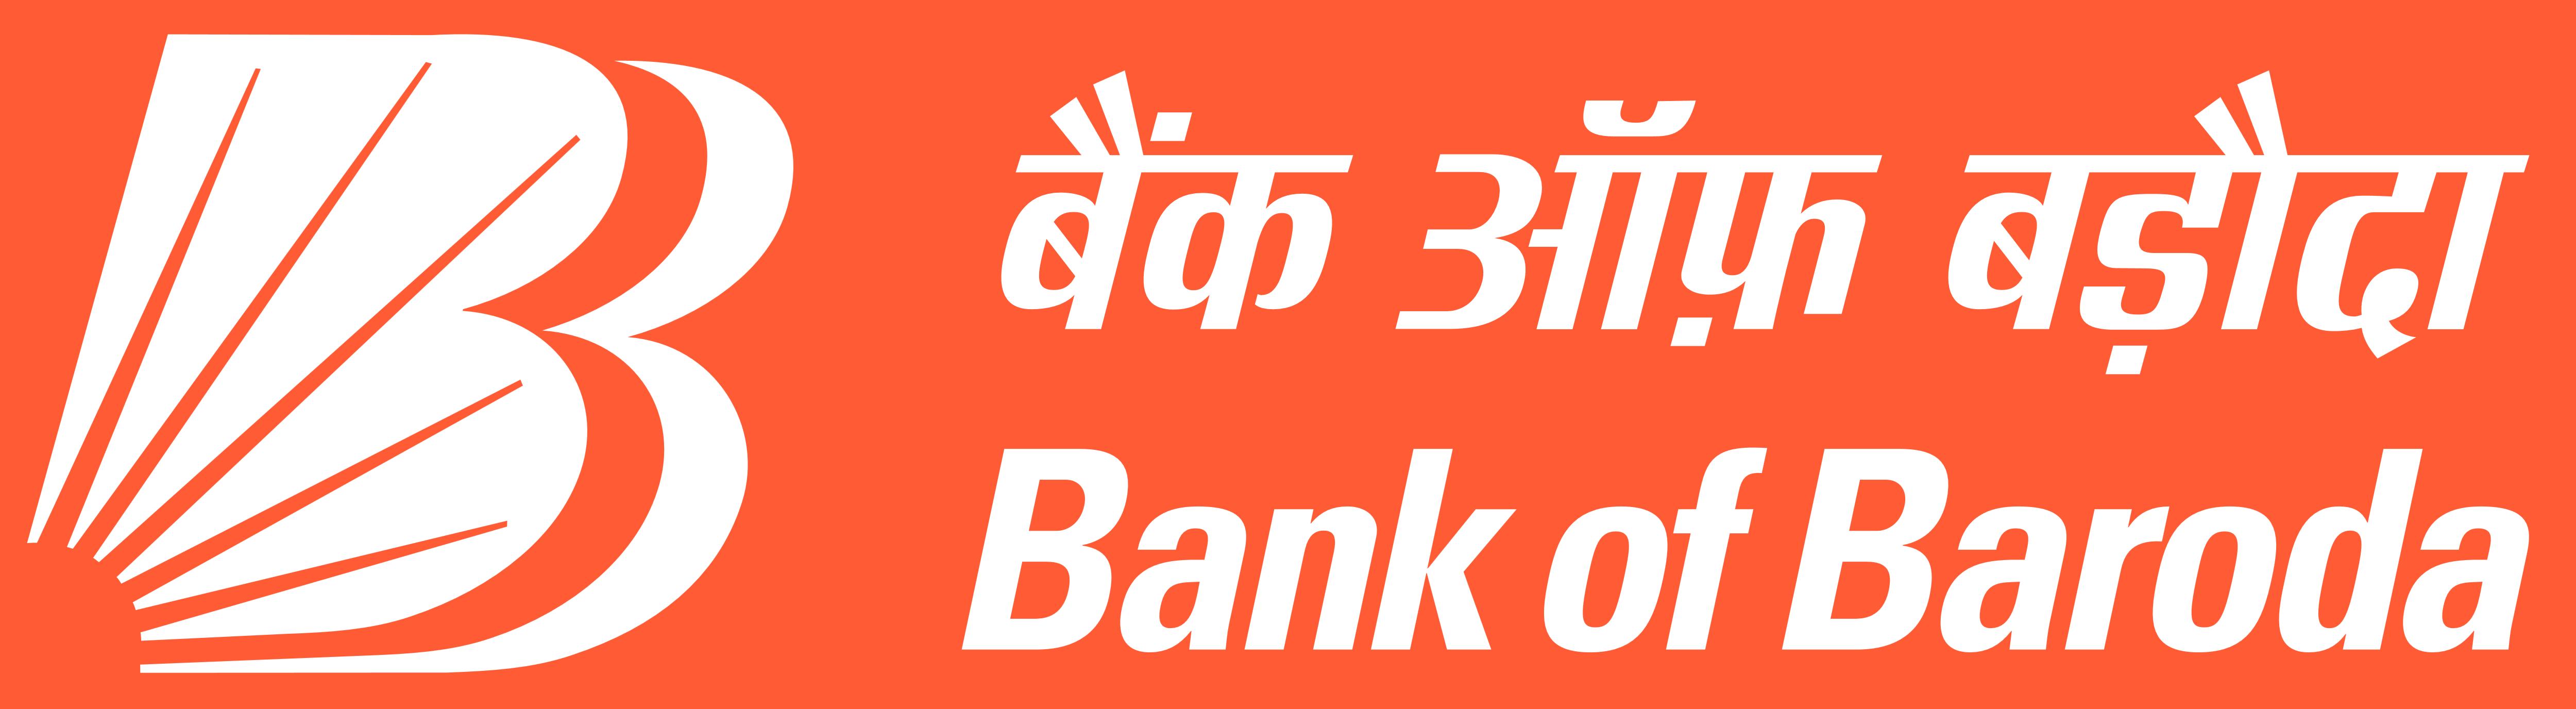 Orange and Red Bank Logo - Bank of Baroda